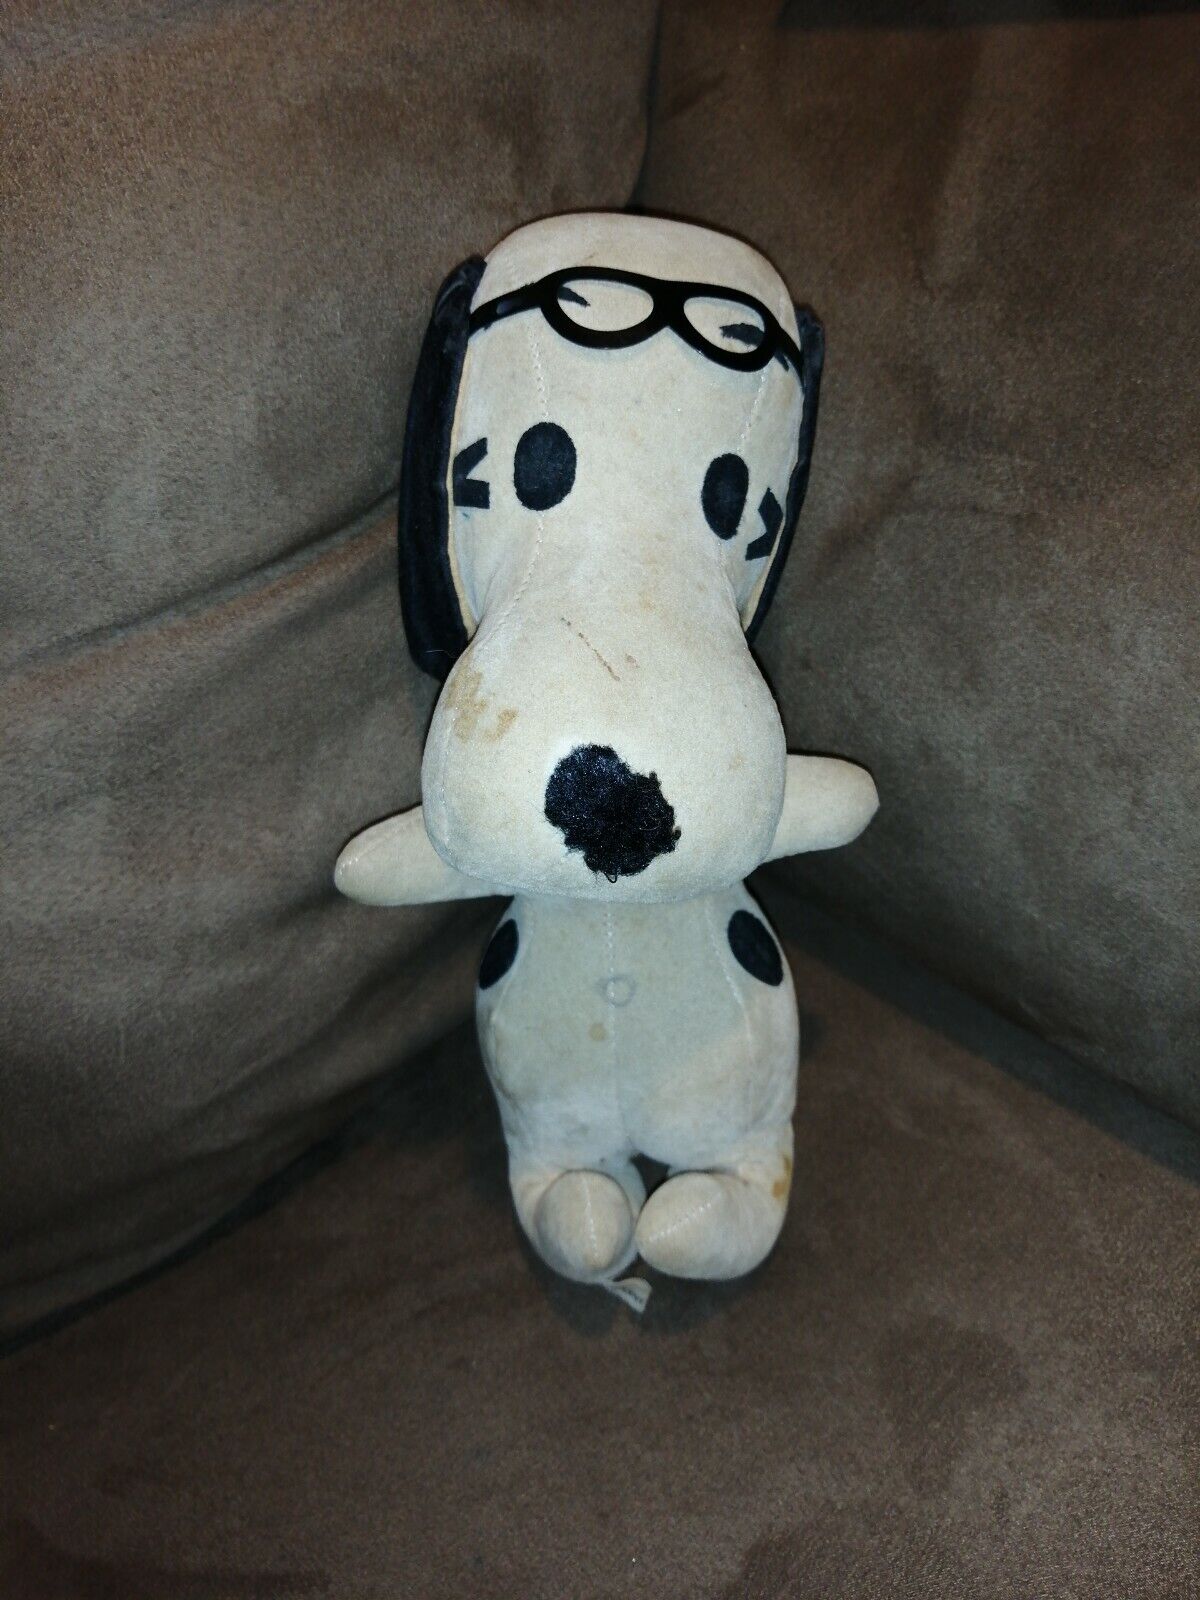 Vintage 1960s Peanuts Snoopy Stuffed Figure Plush Doll JAPAN #715 Amico Goggles